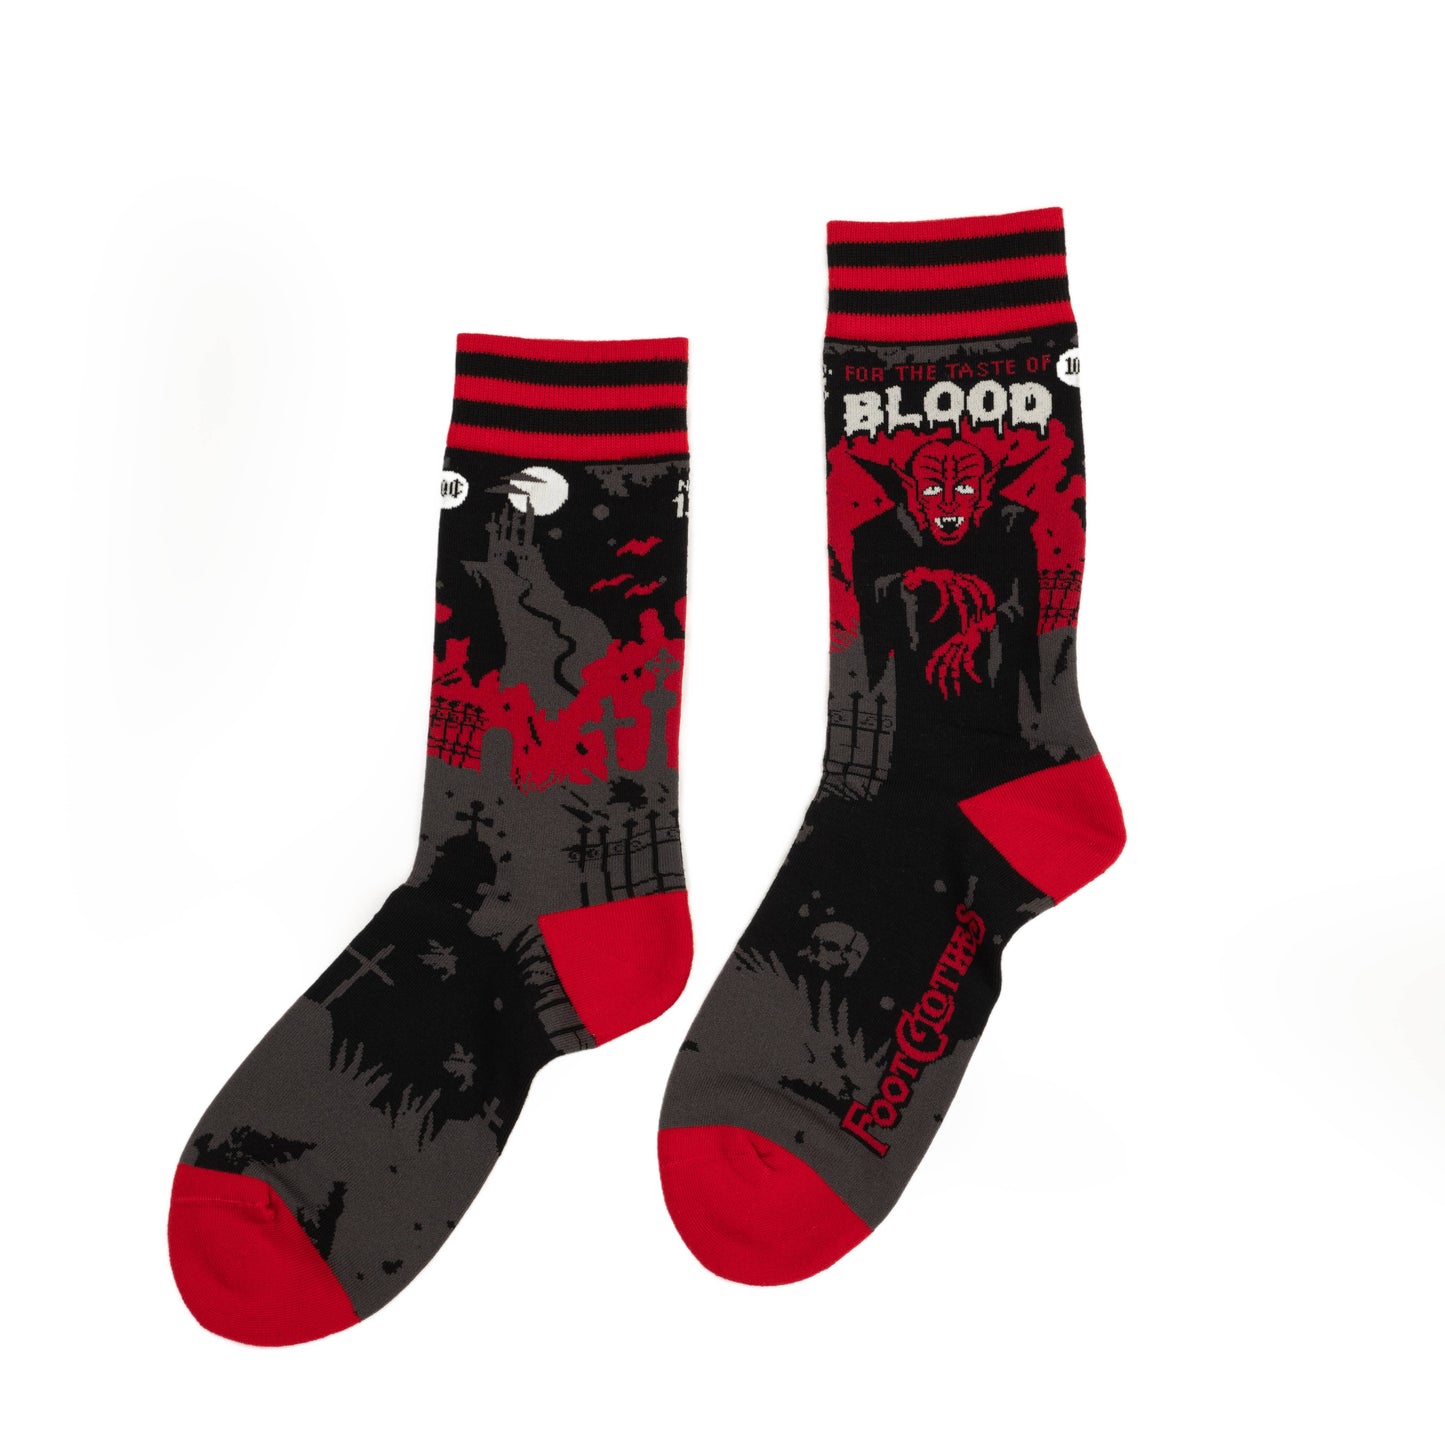 Dracula's Bloodlust Crew Socks